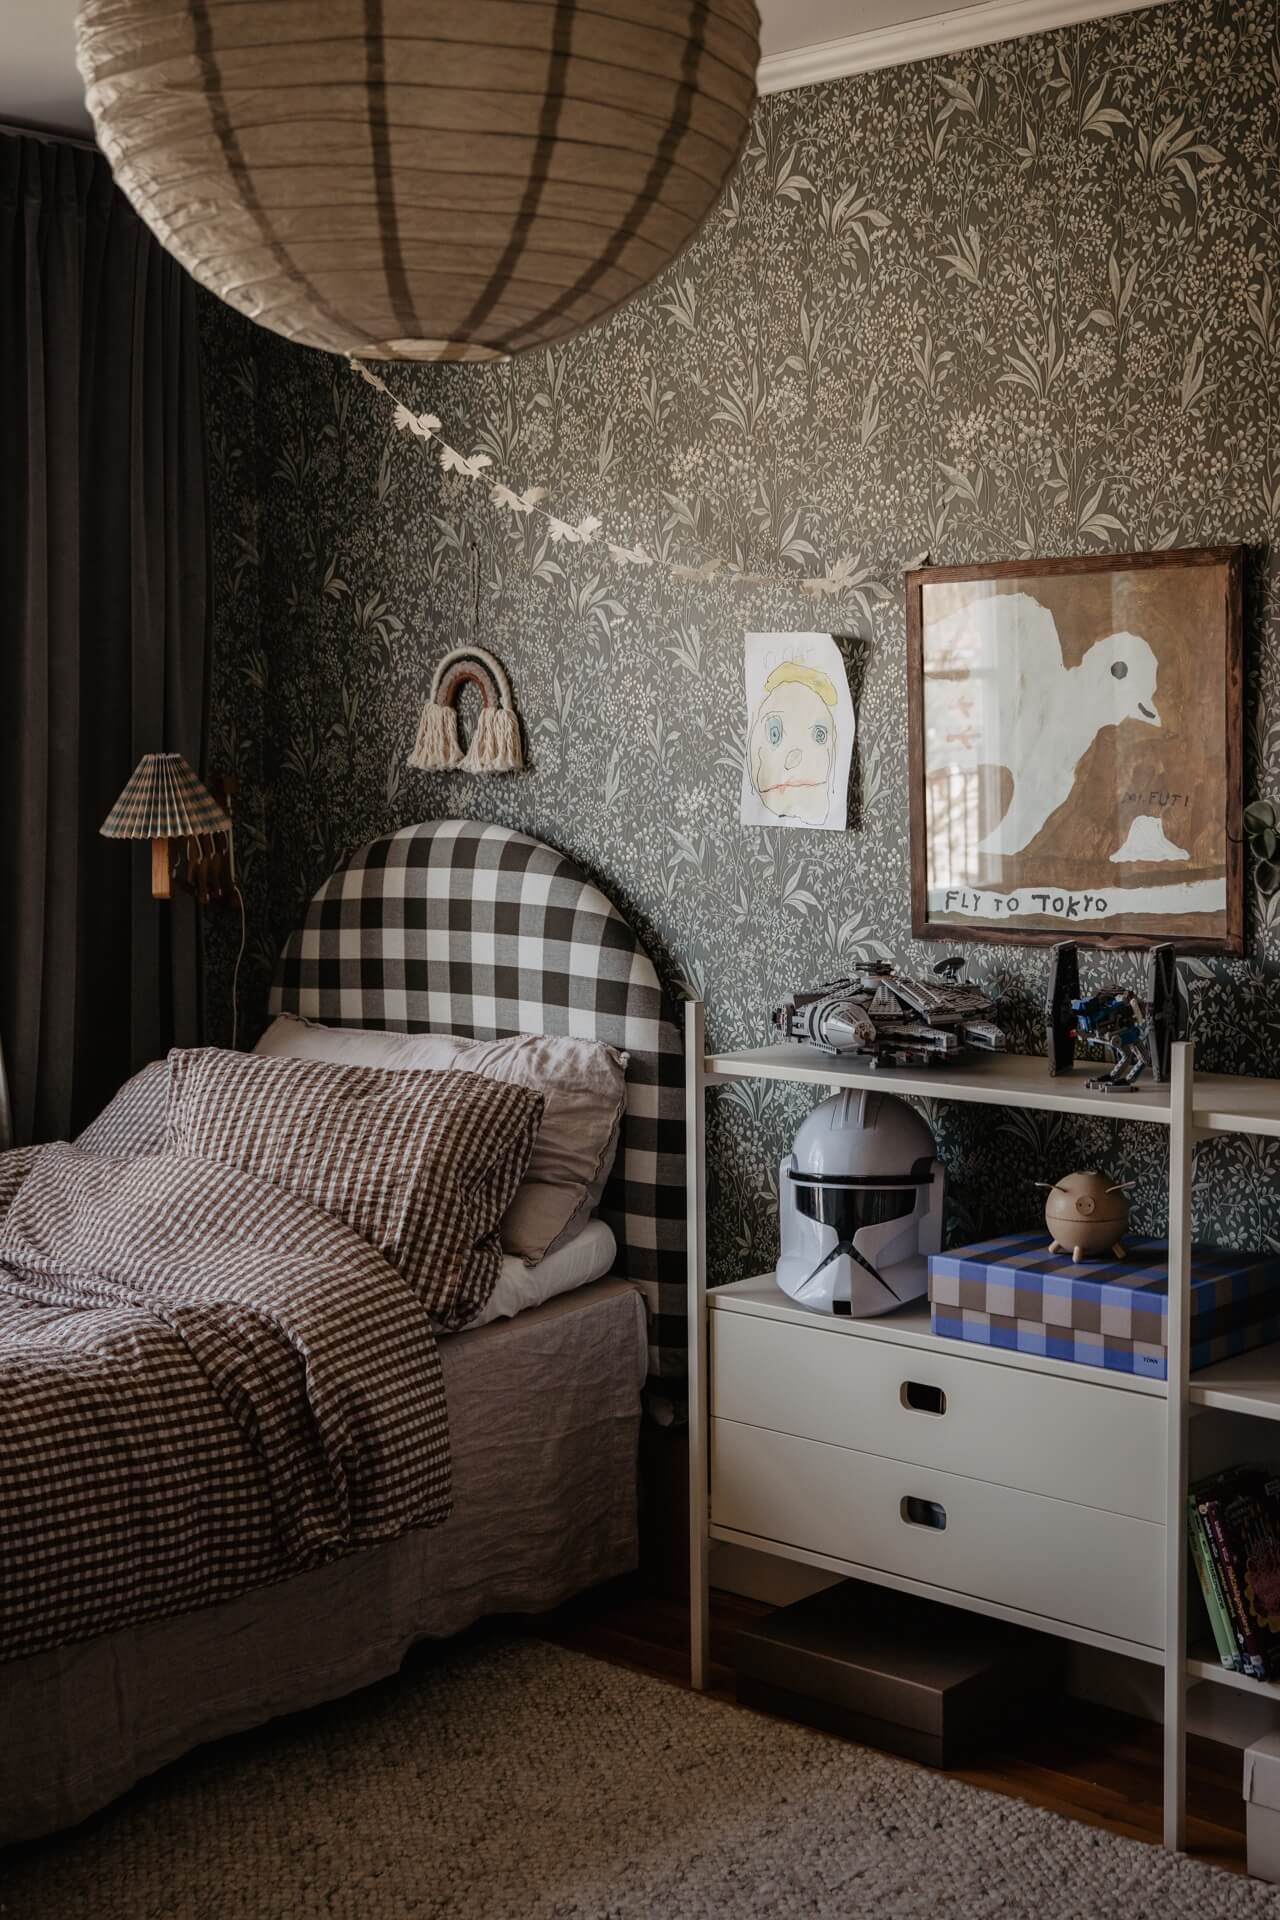 Emelie Sundberg home tour - interior of Swedish home - kids bedroom